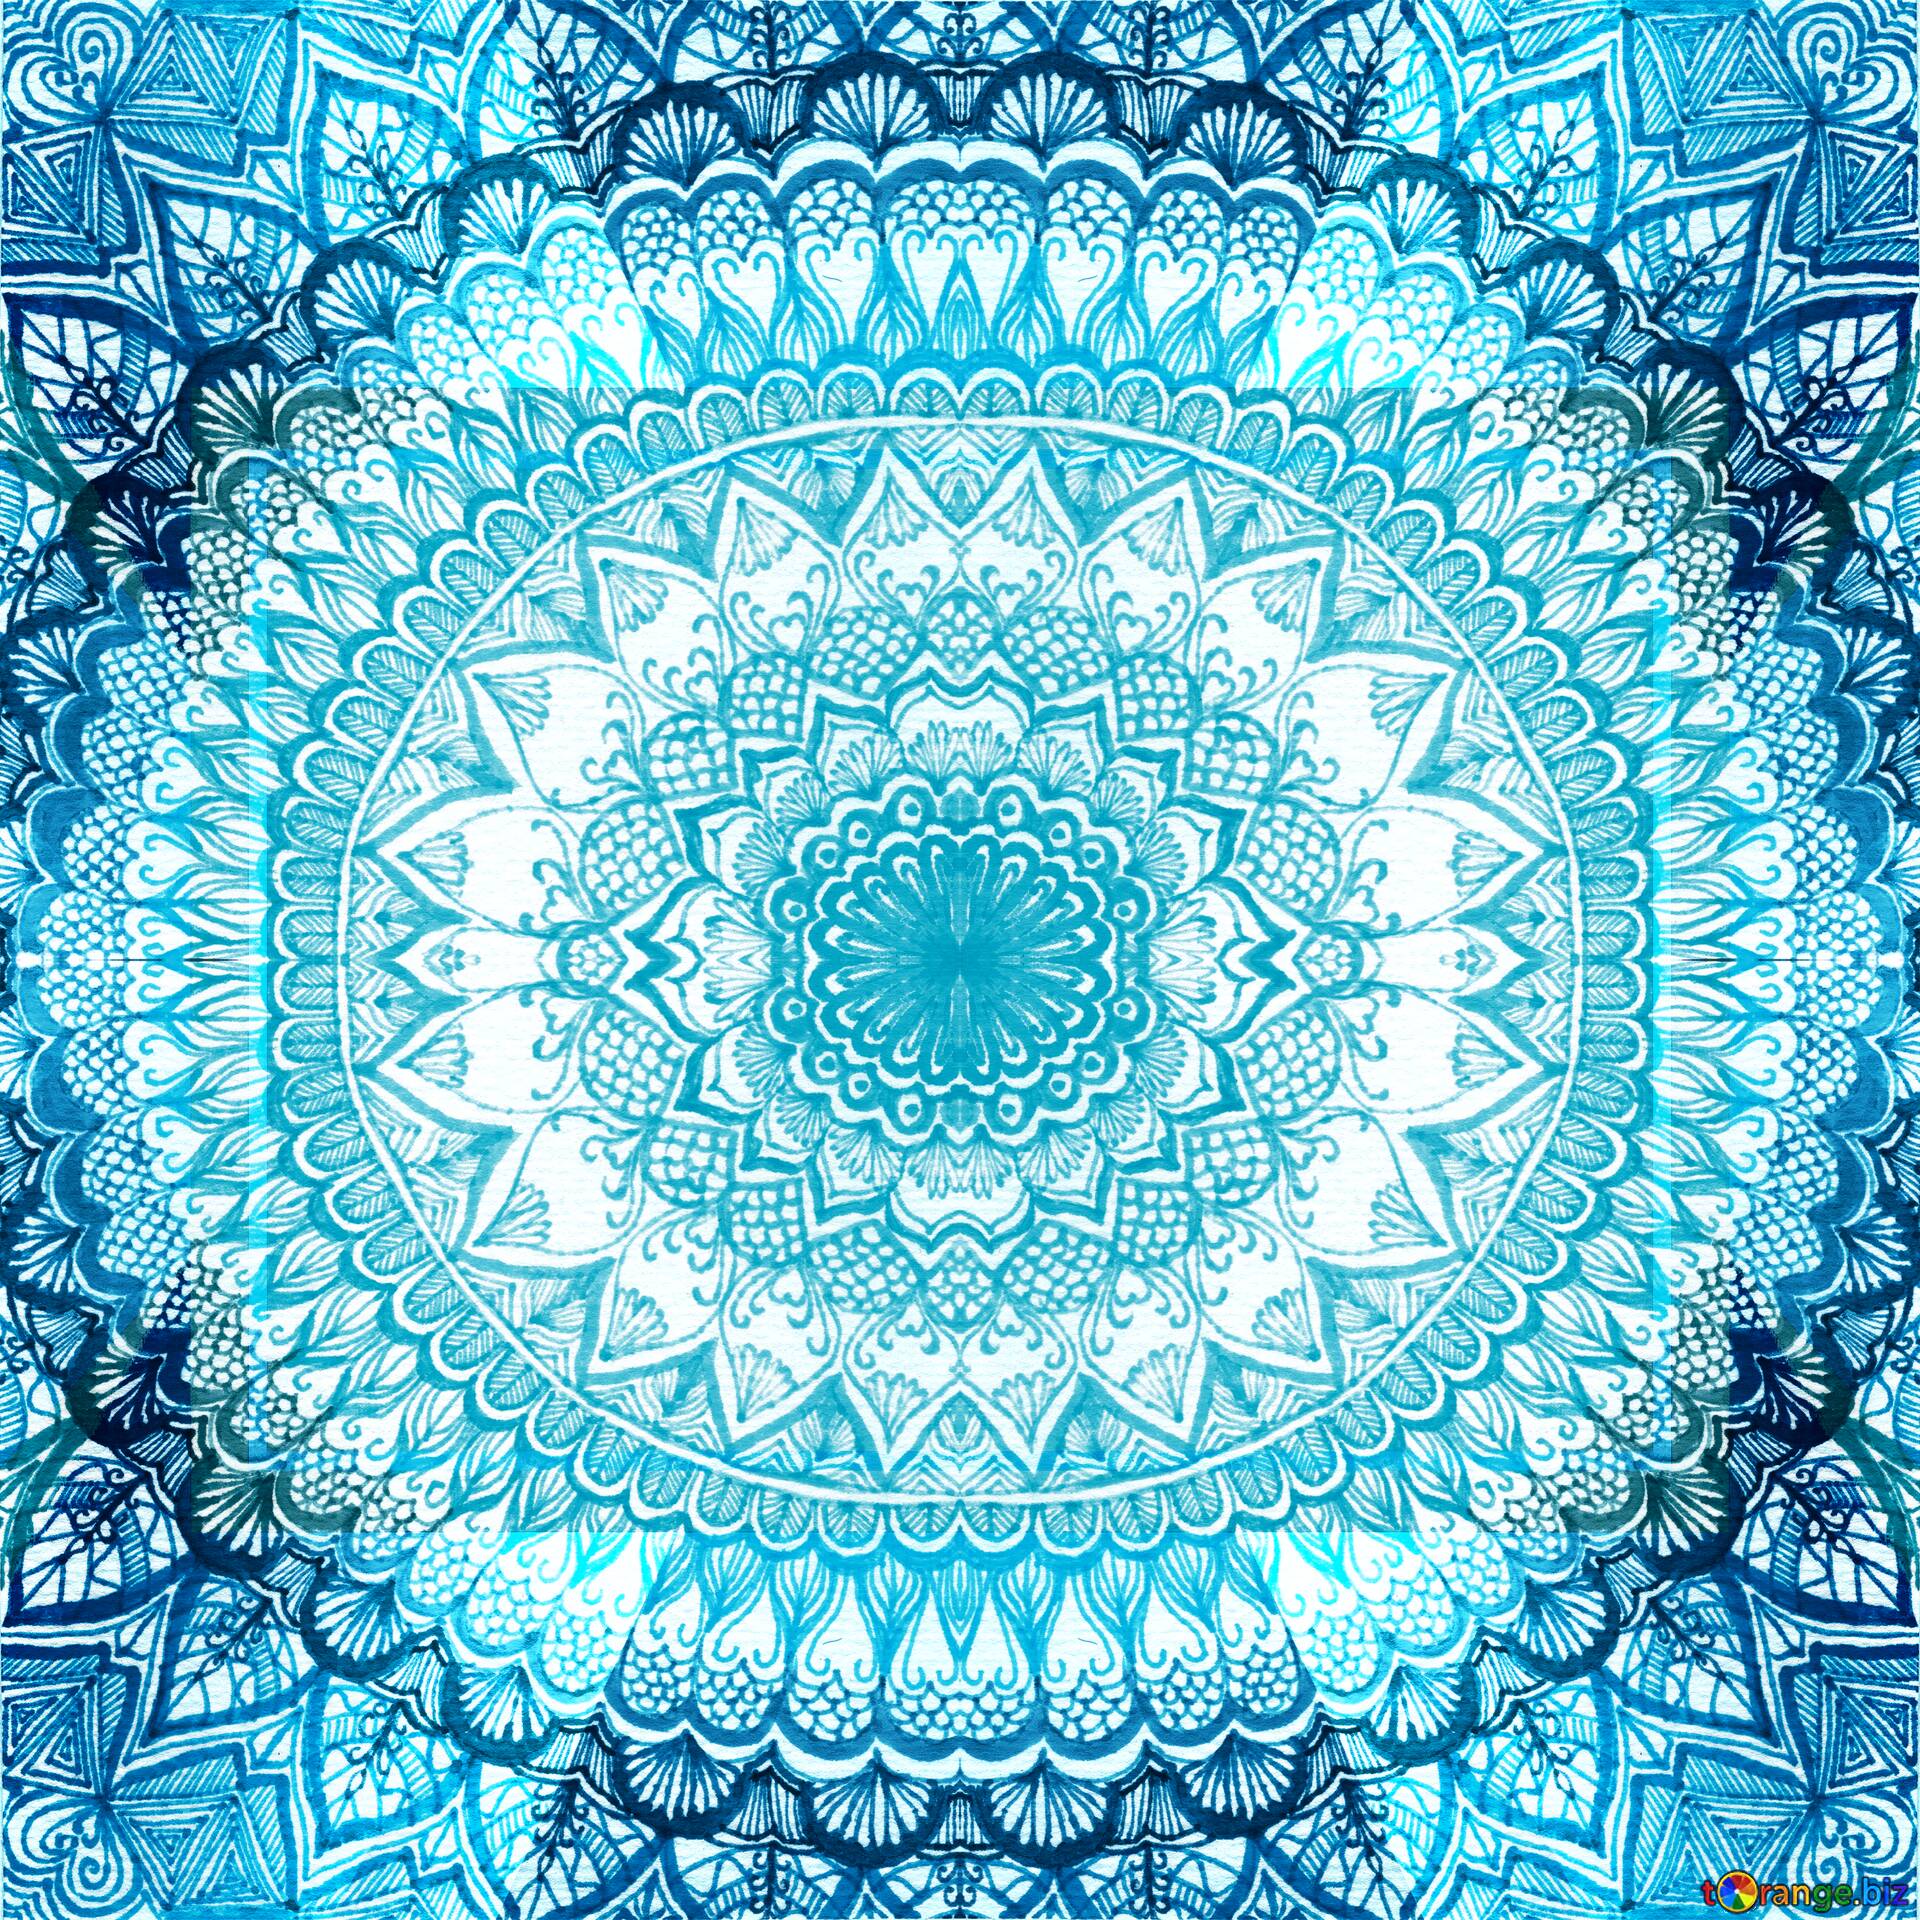 Psychedelic art motif design circle mandala drawing background